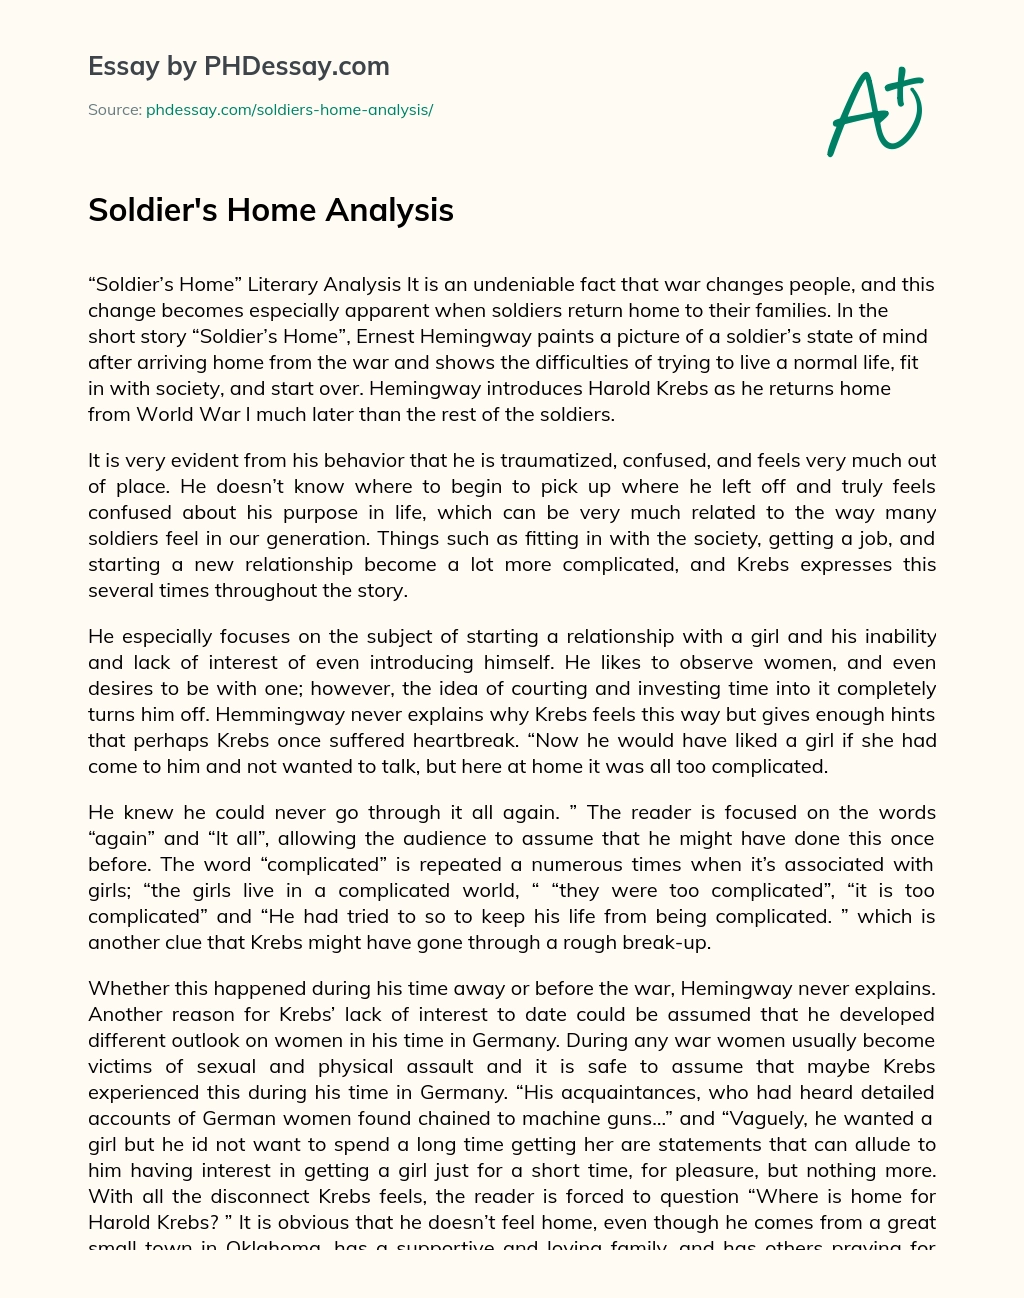 Soldier’s Home Analysis essay